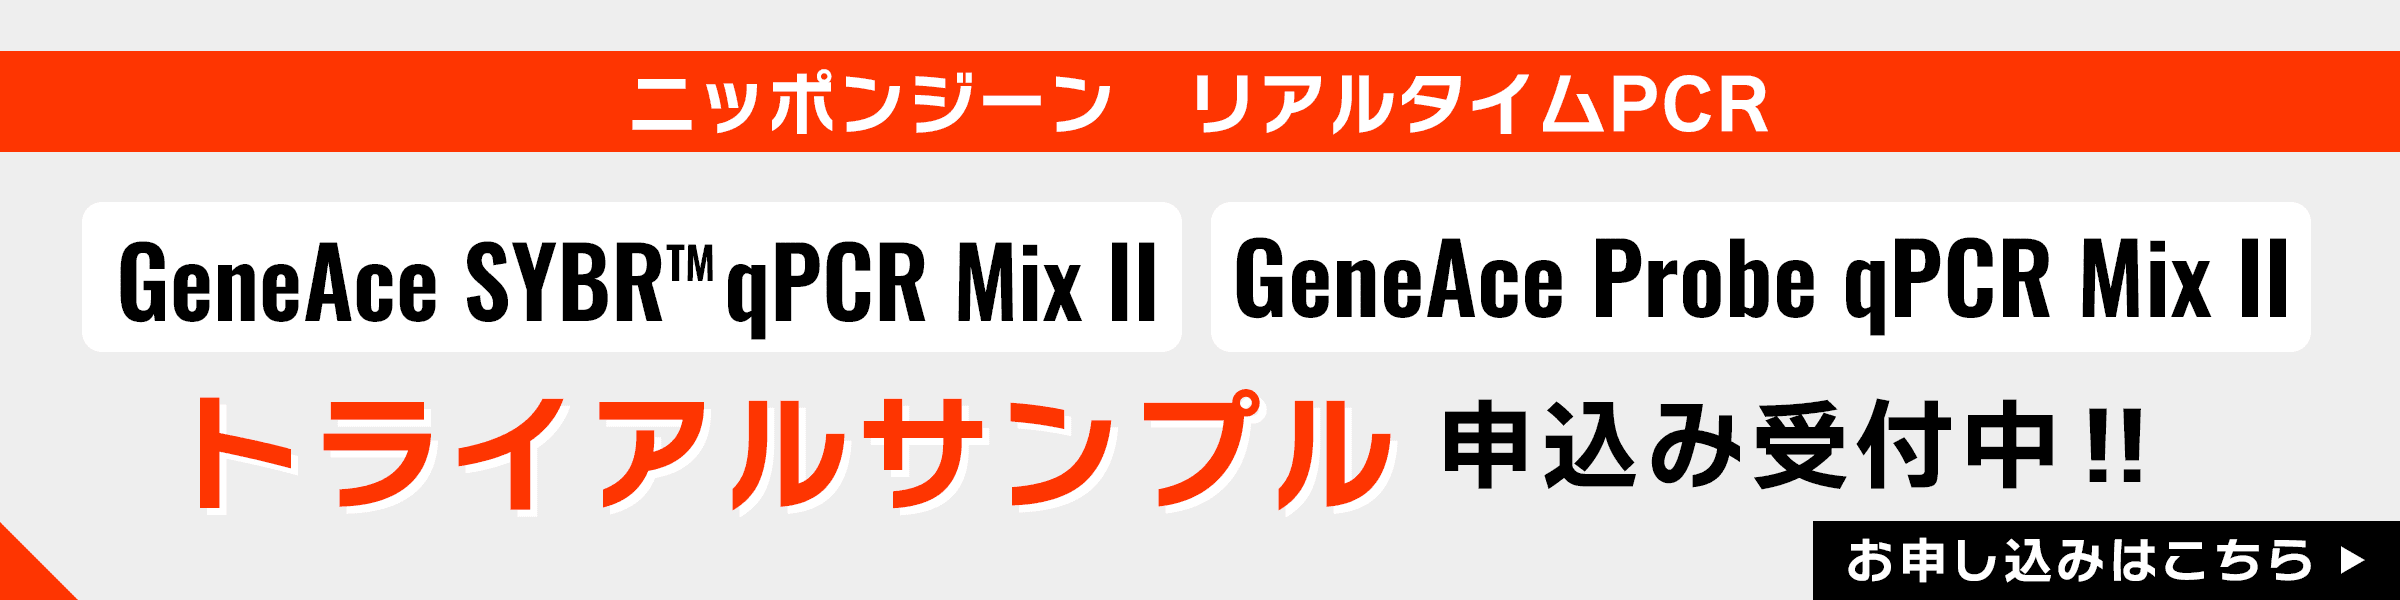 GeneAce® qPCR Mixシリーズ サンプルキャンペーン